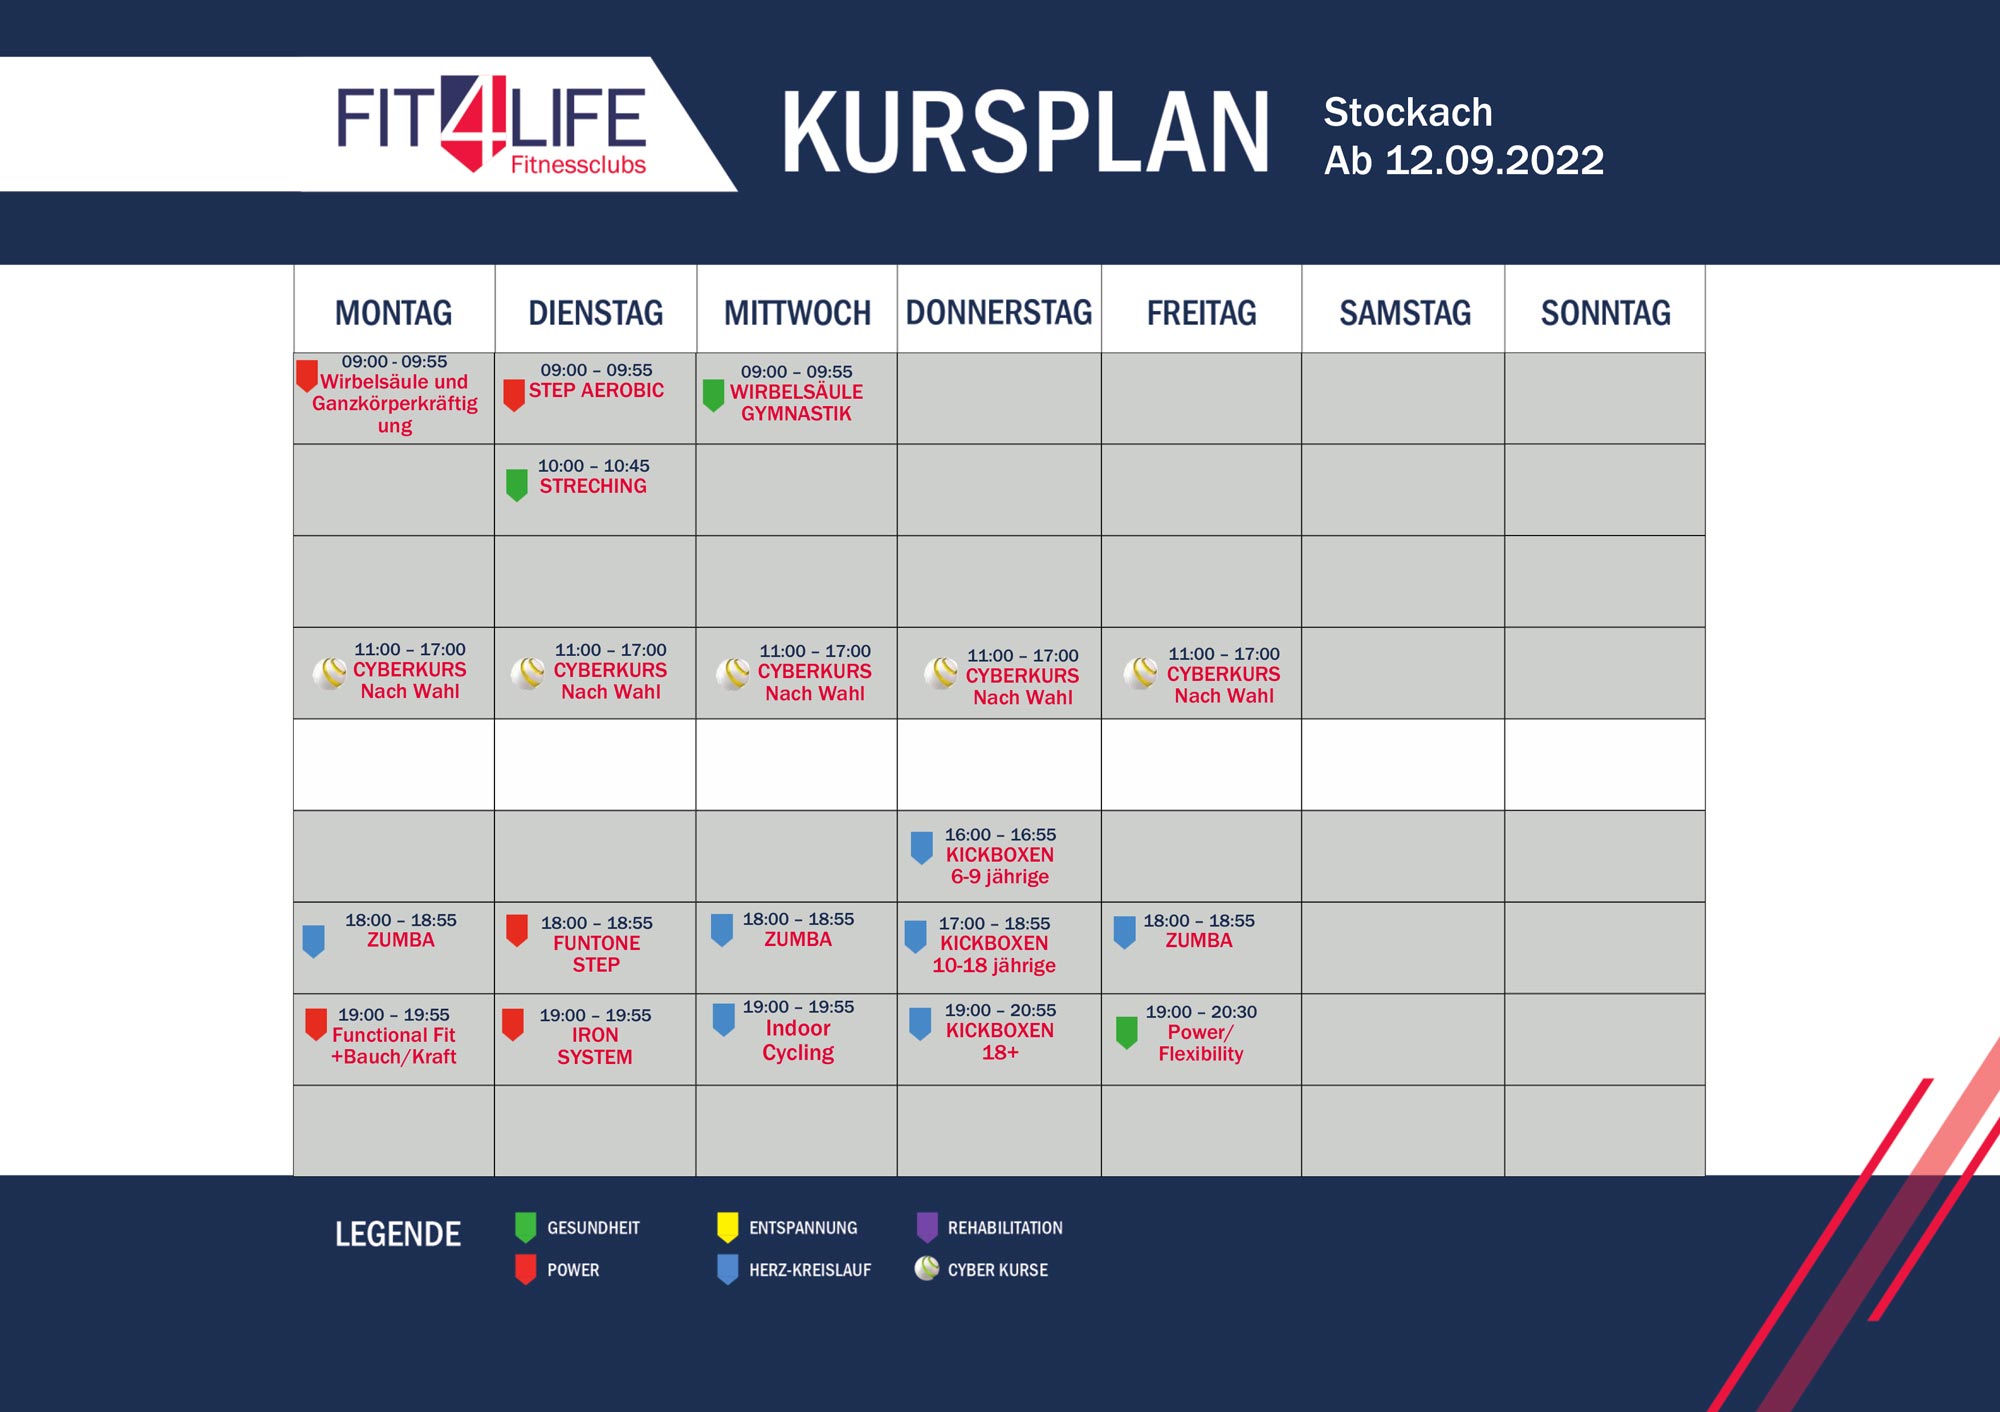 Kursplan-stockach12.09.2022-extern